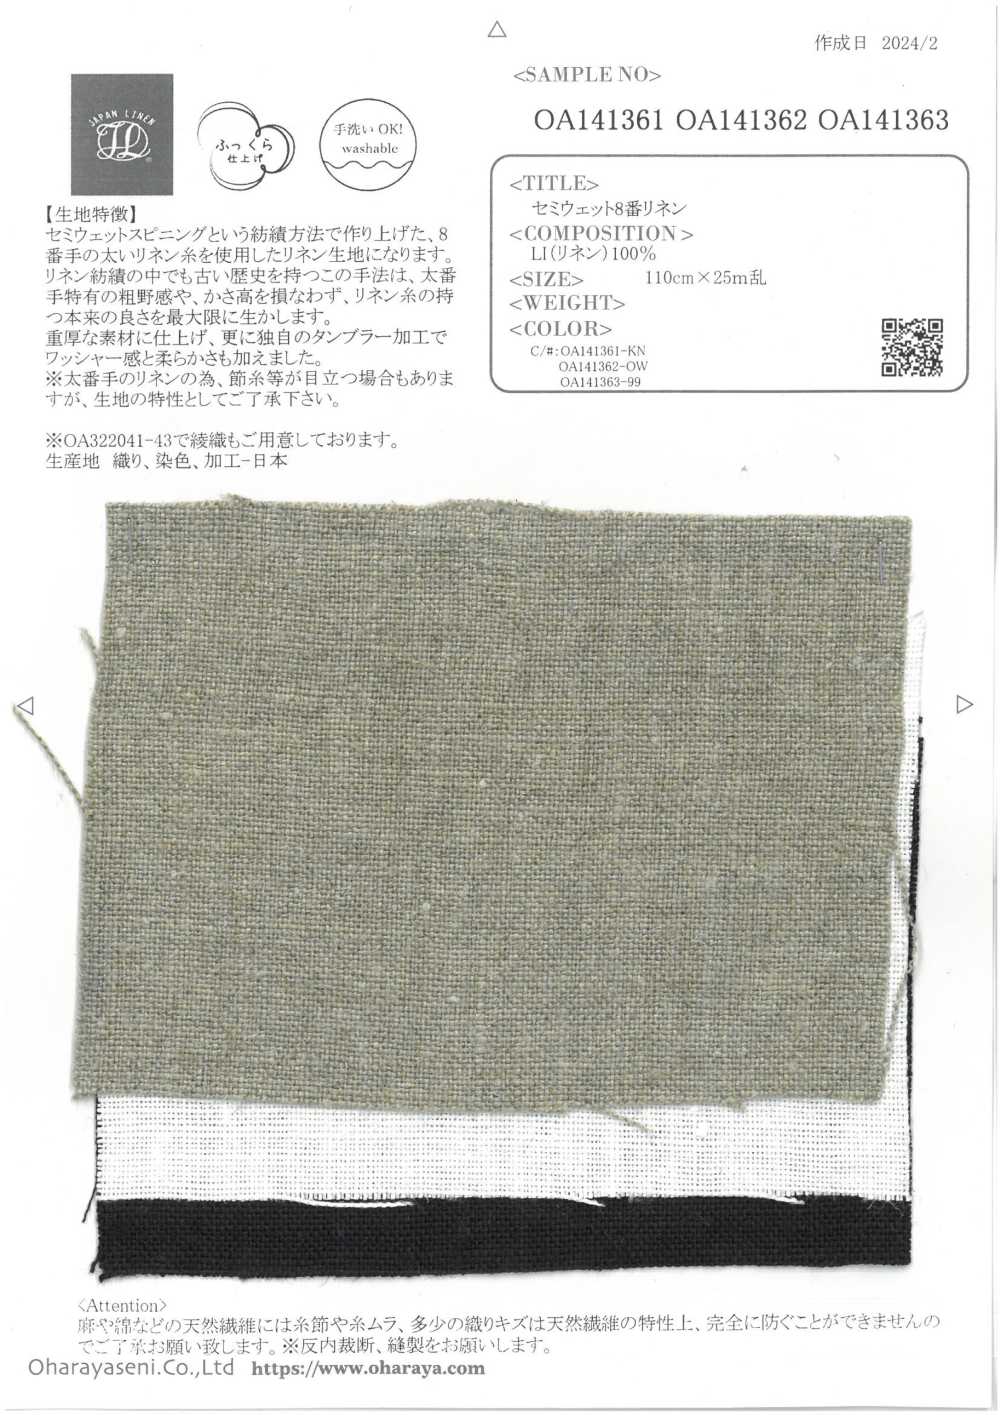 OA141361 Halbfeuchtes Leinen Nr. 8[Textilgewebe] Oharayaseni